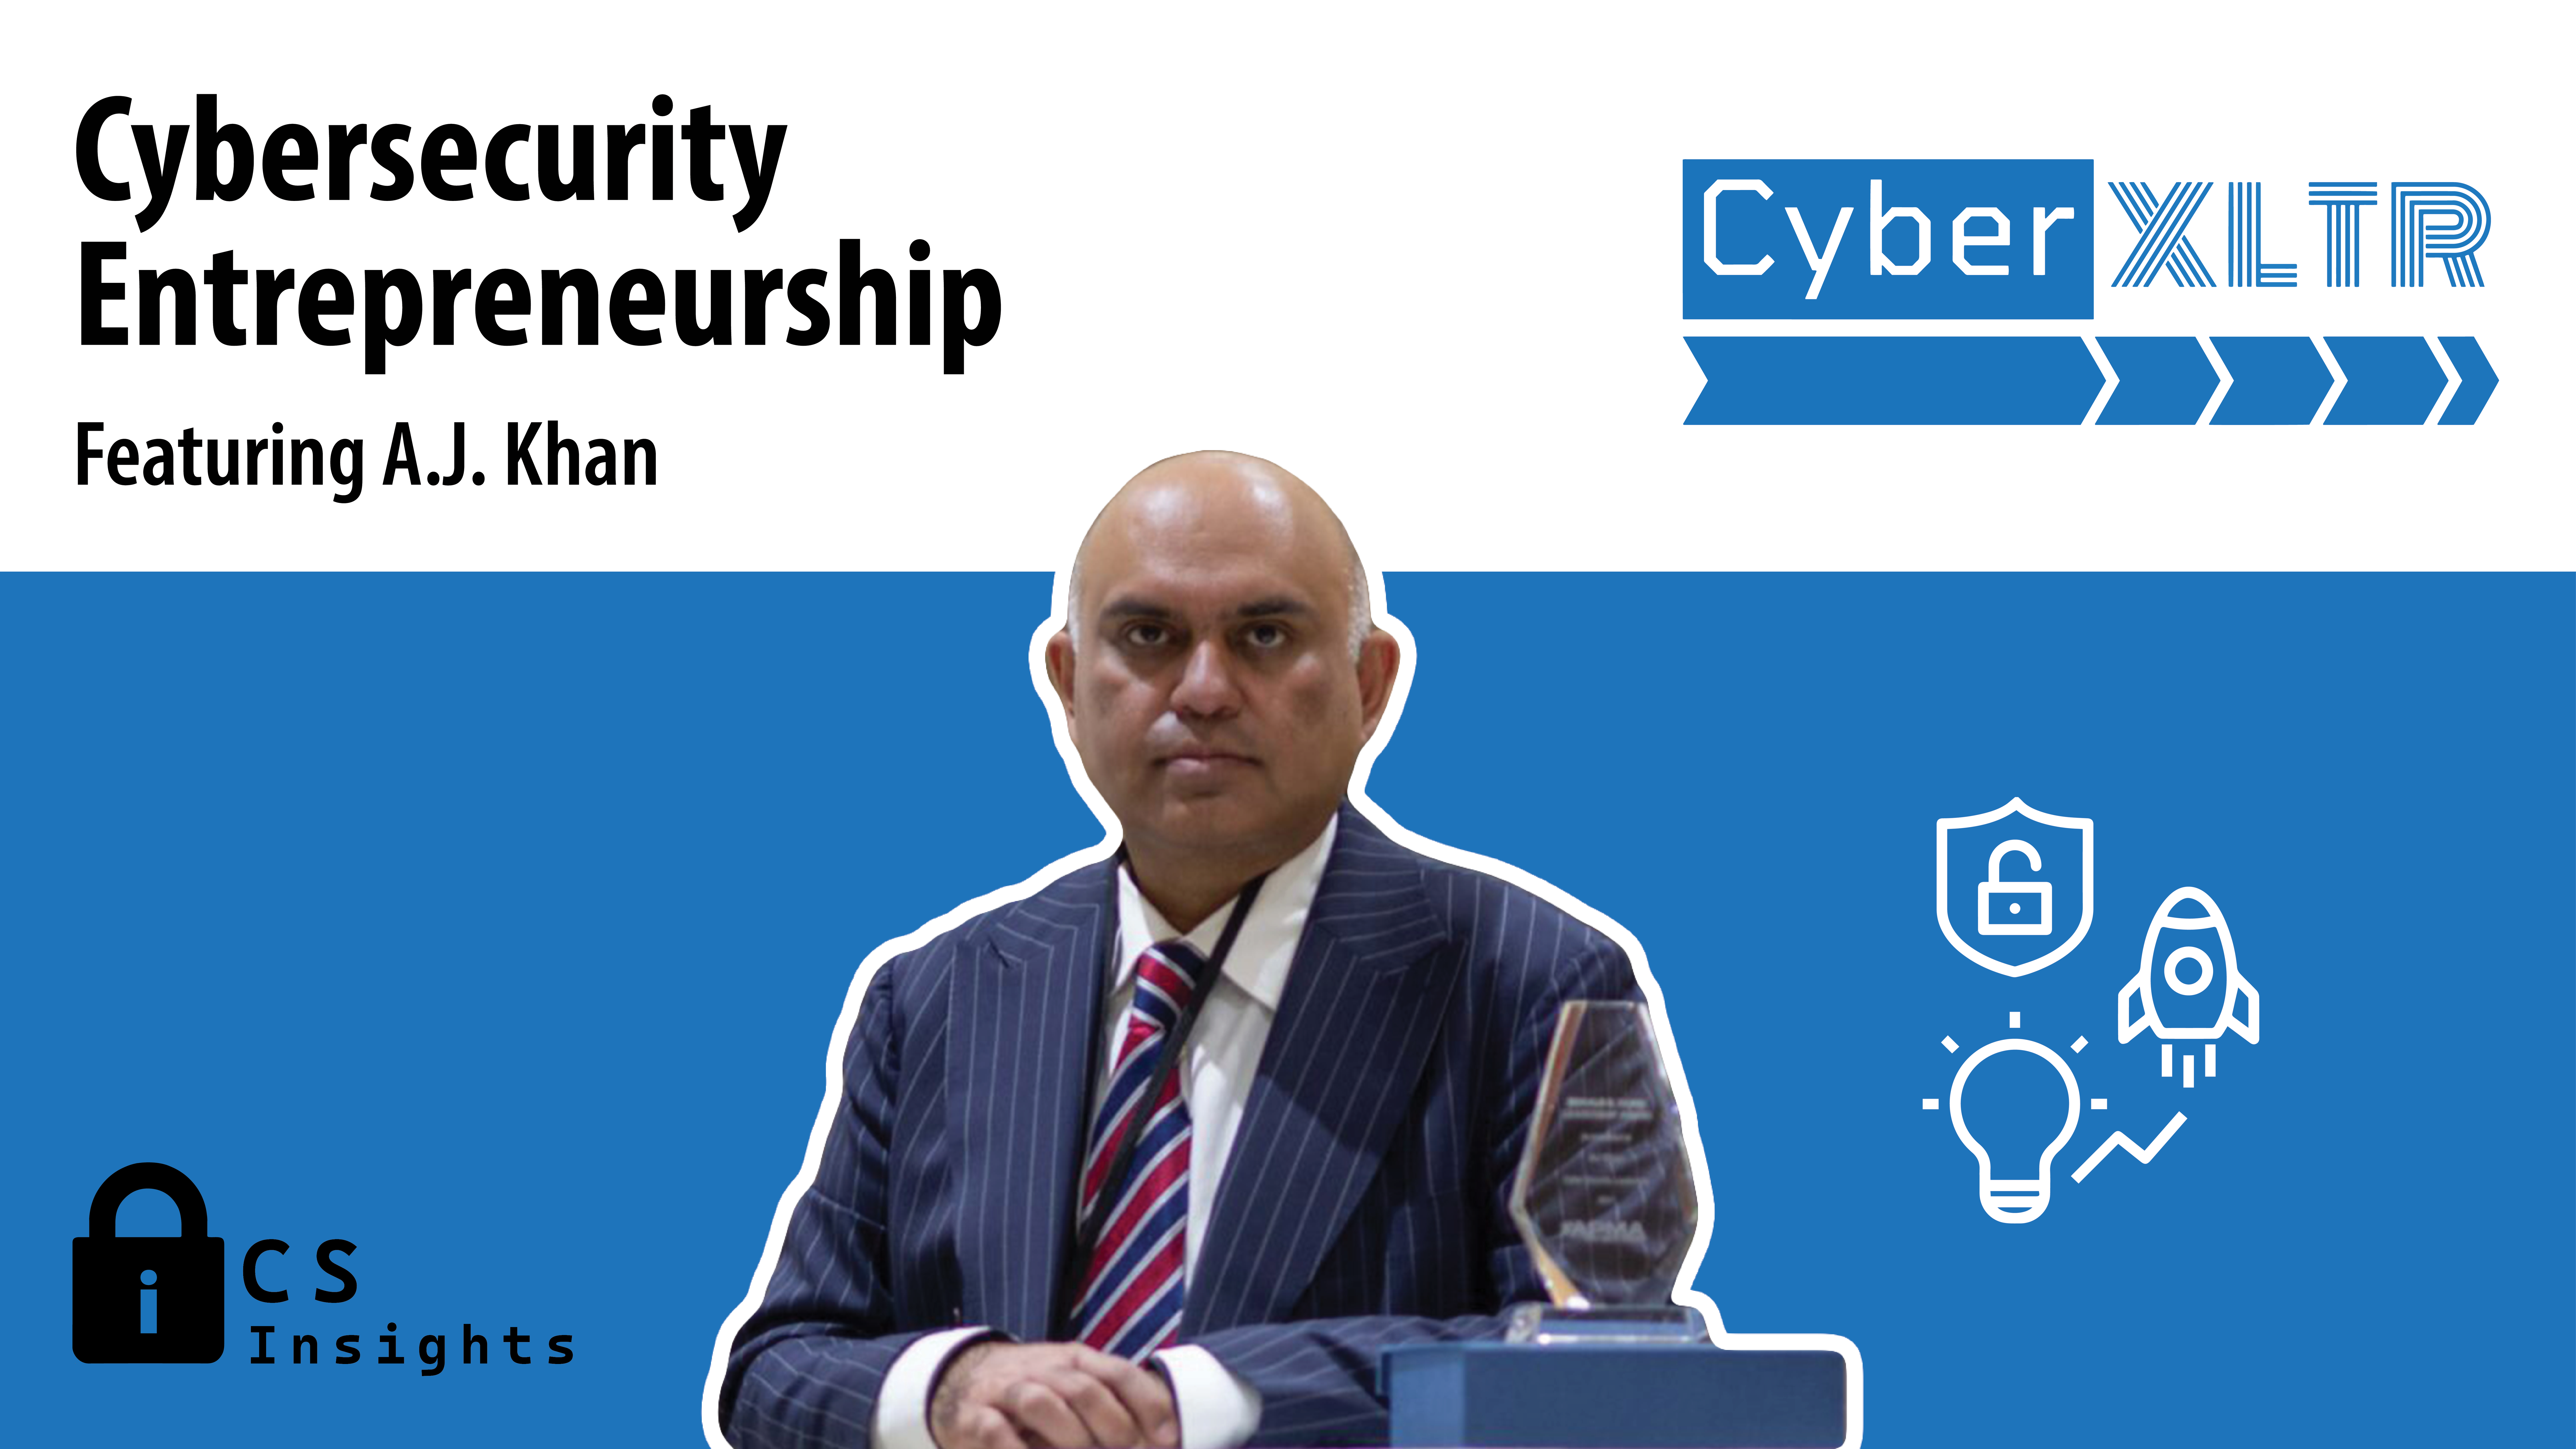 Cybersecurity Entrepreneurship featuring AJ Khan